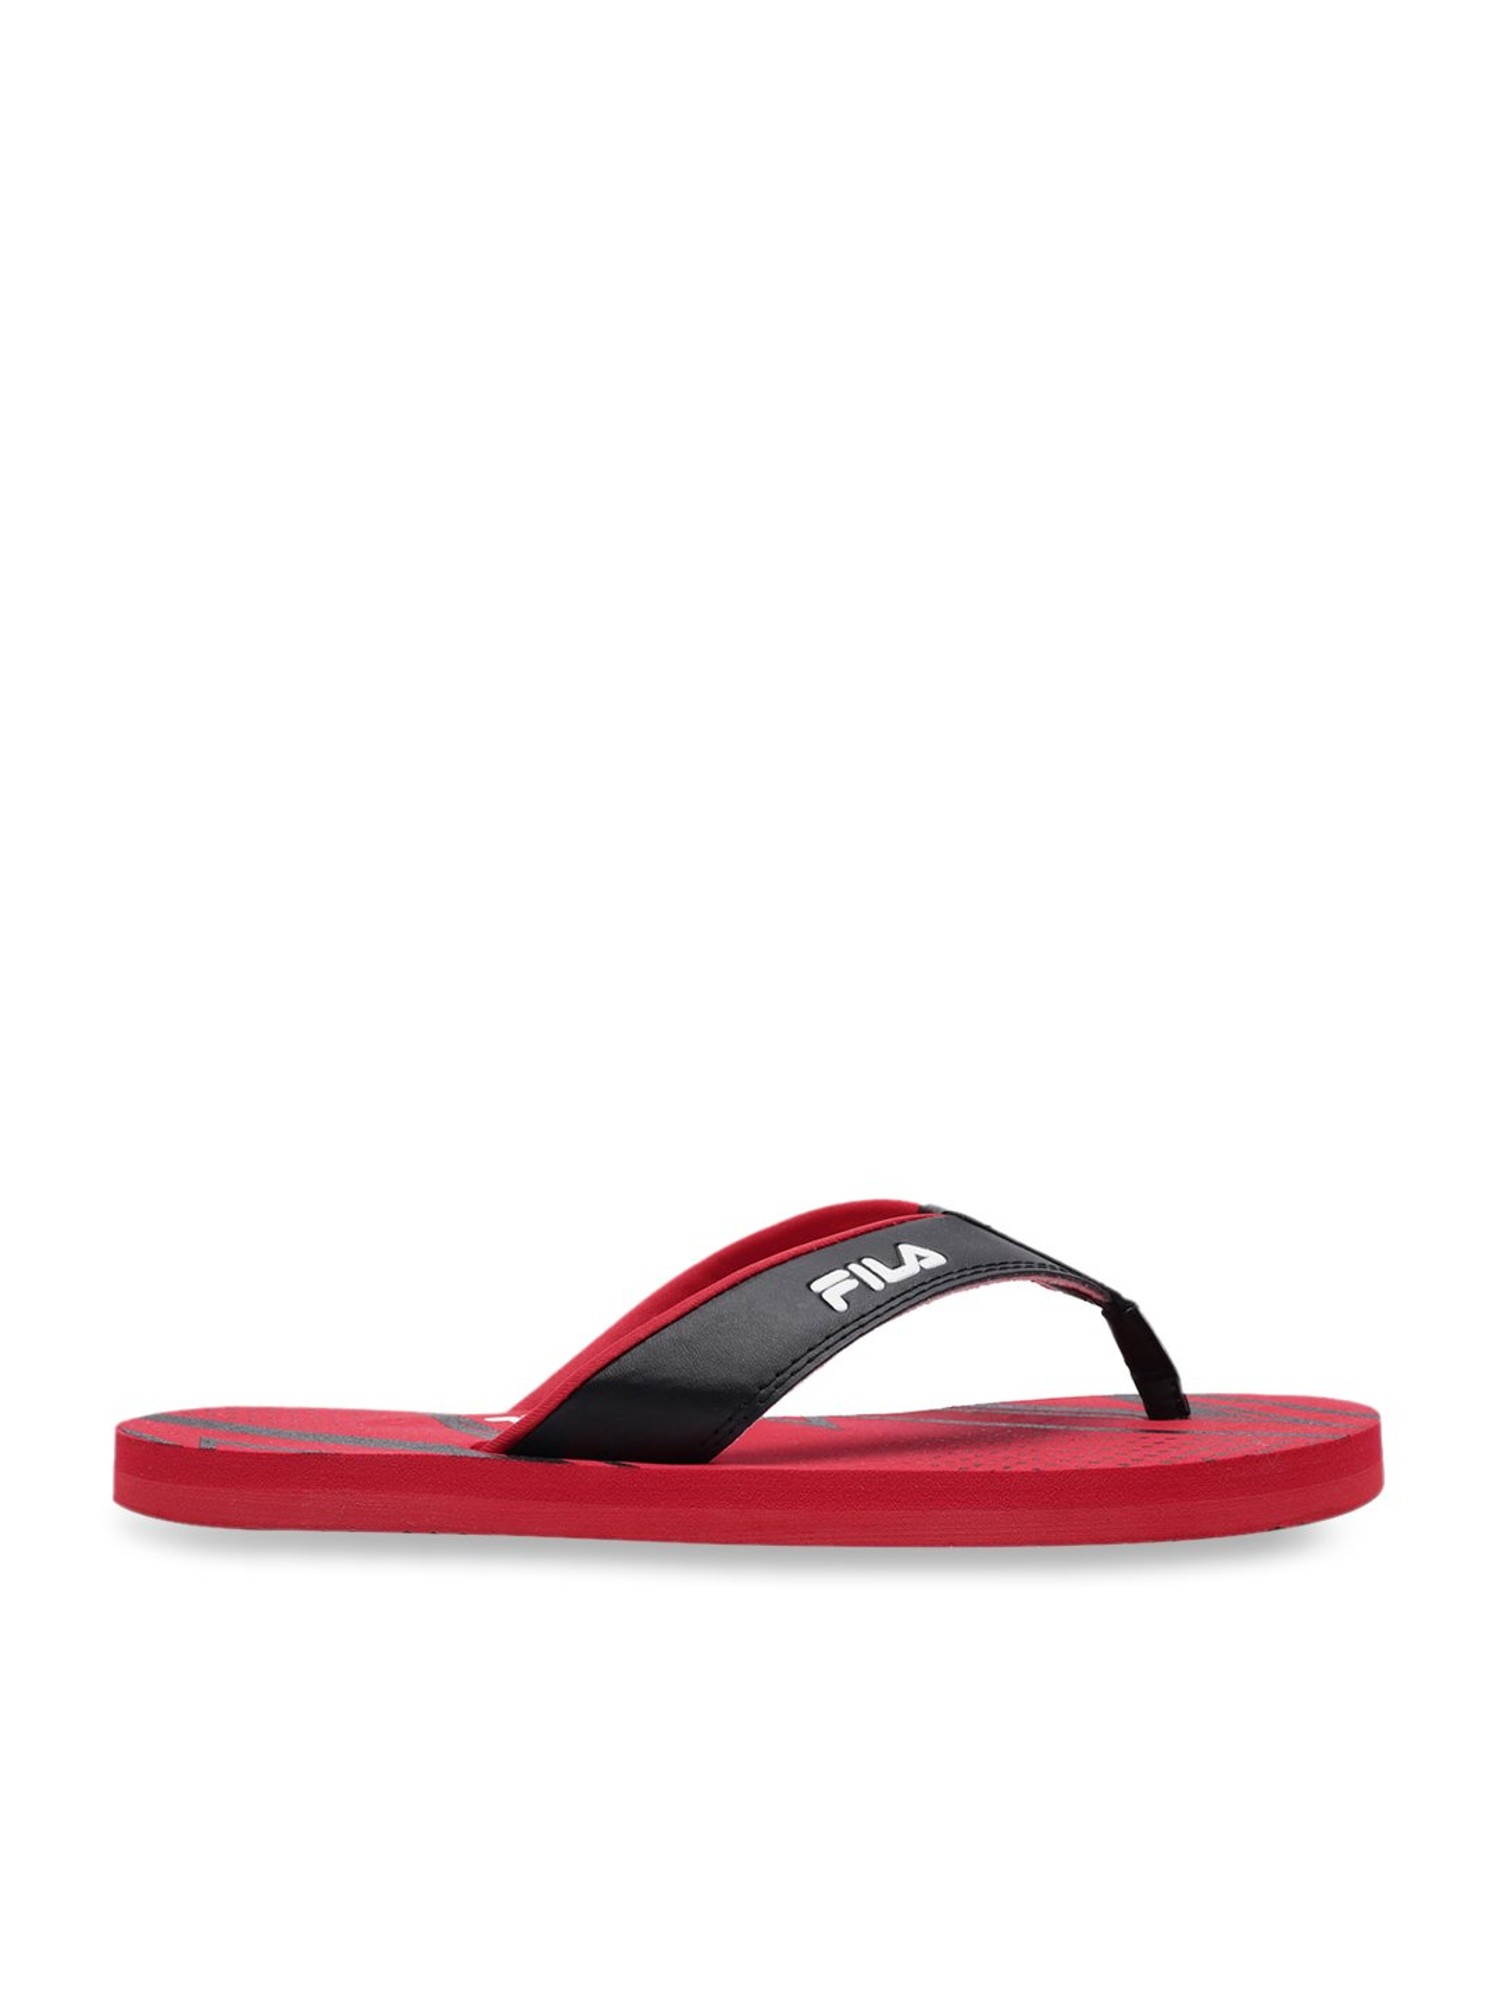 Fila Men's Black, White and Red Slip-on Sandal - 10 D (M) US : Amazon.in:  Fashion